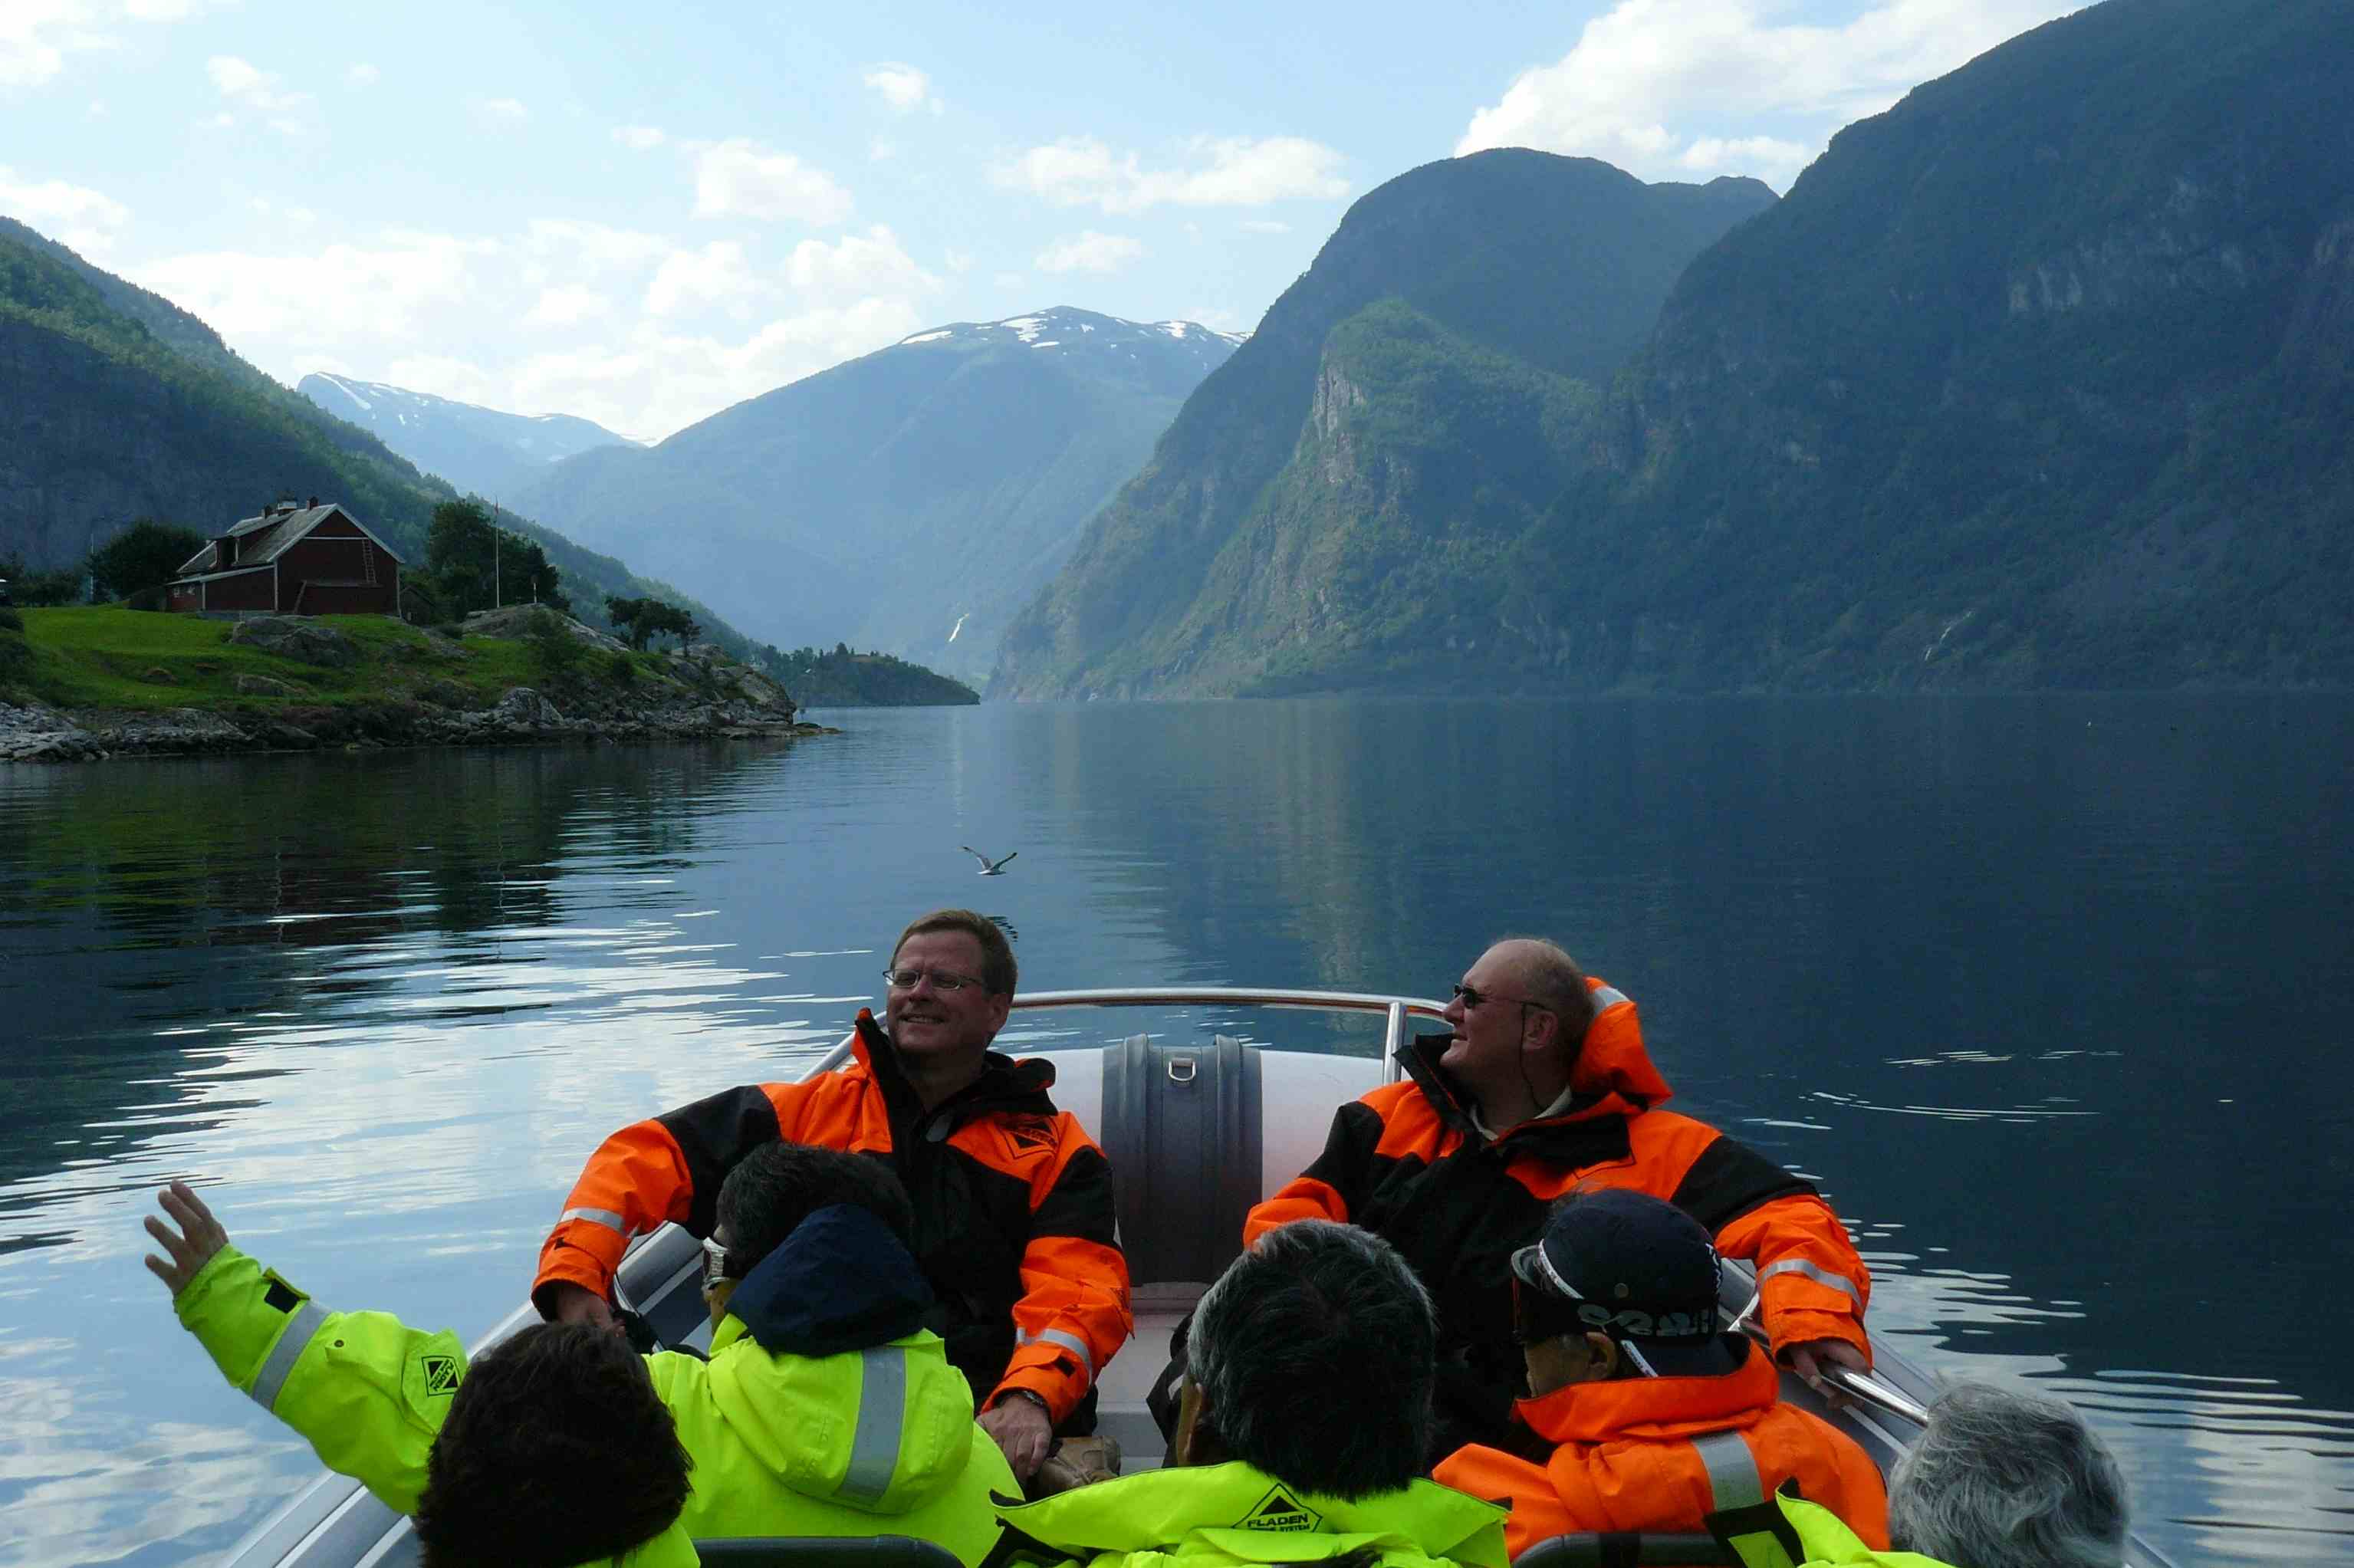 Full pack fjord tour from Bergen